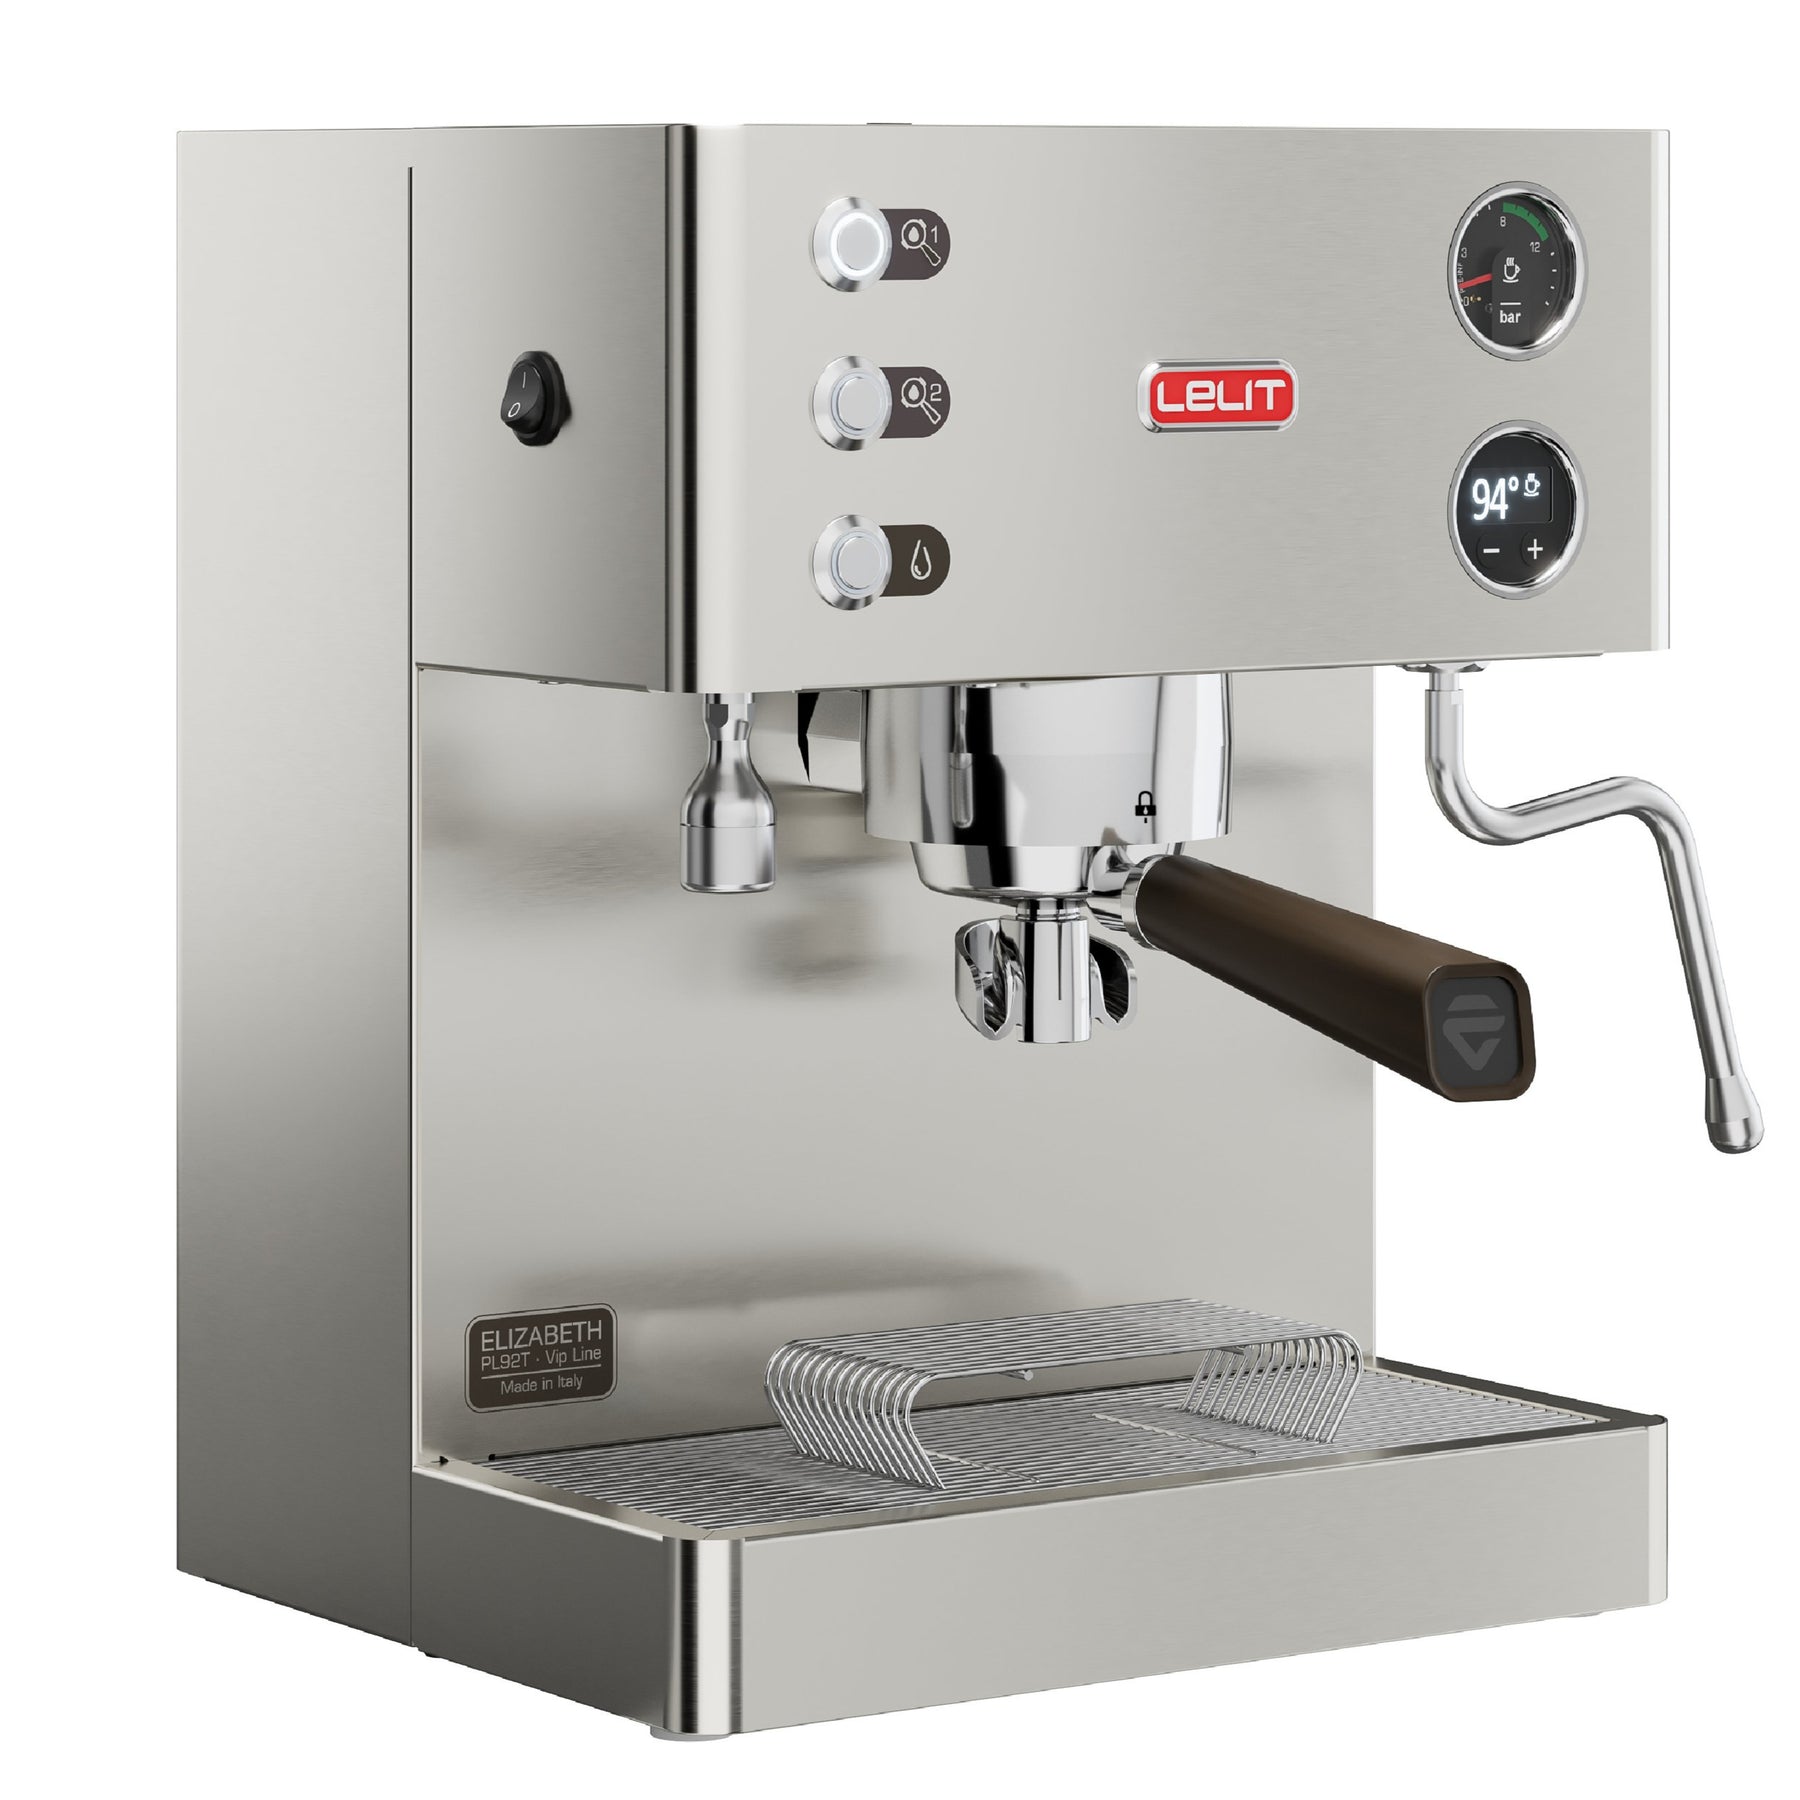 Lelit - Elizabeth - PL92T - V3 - Double Boiler Espresso Machine